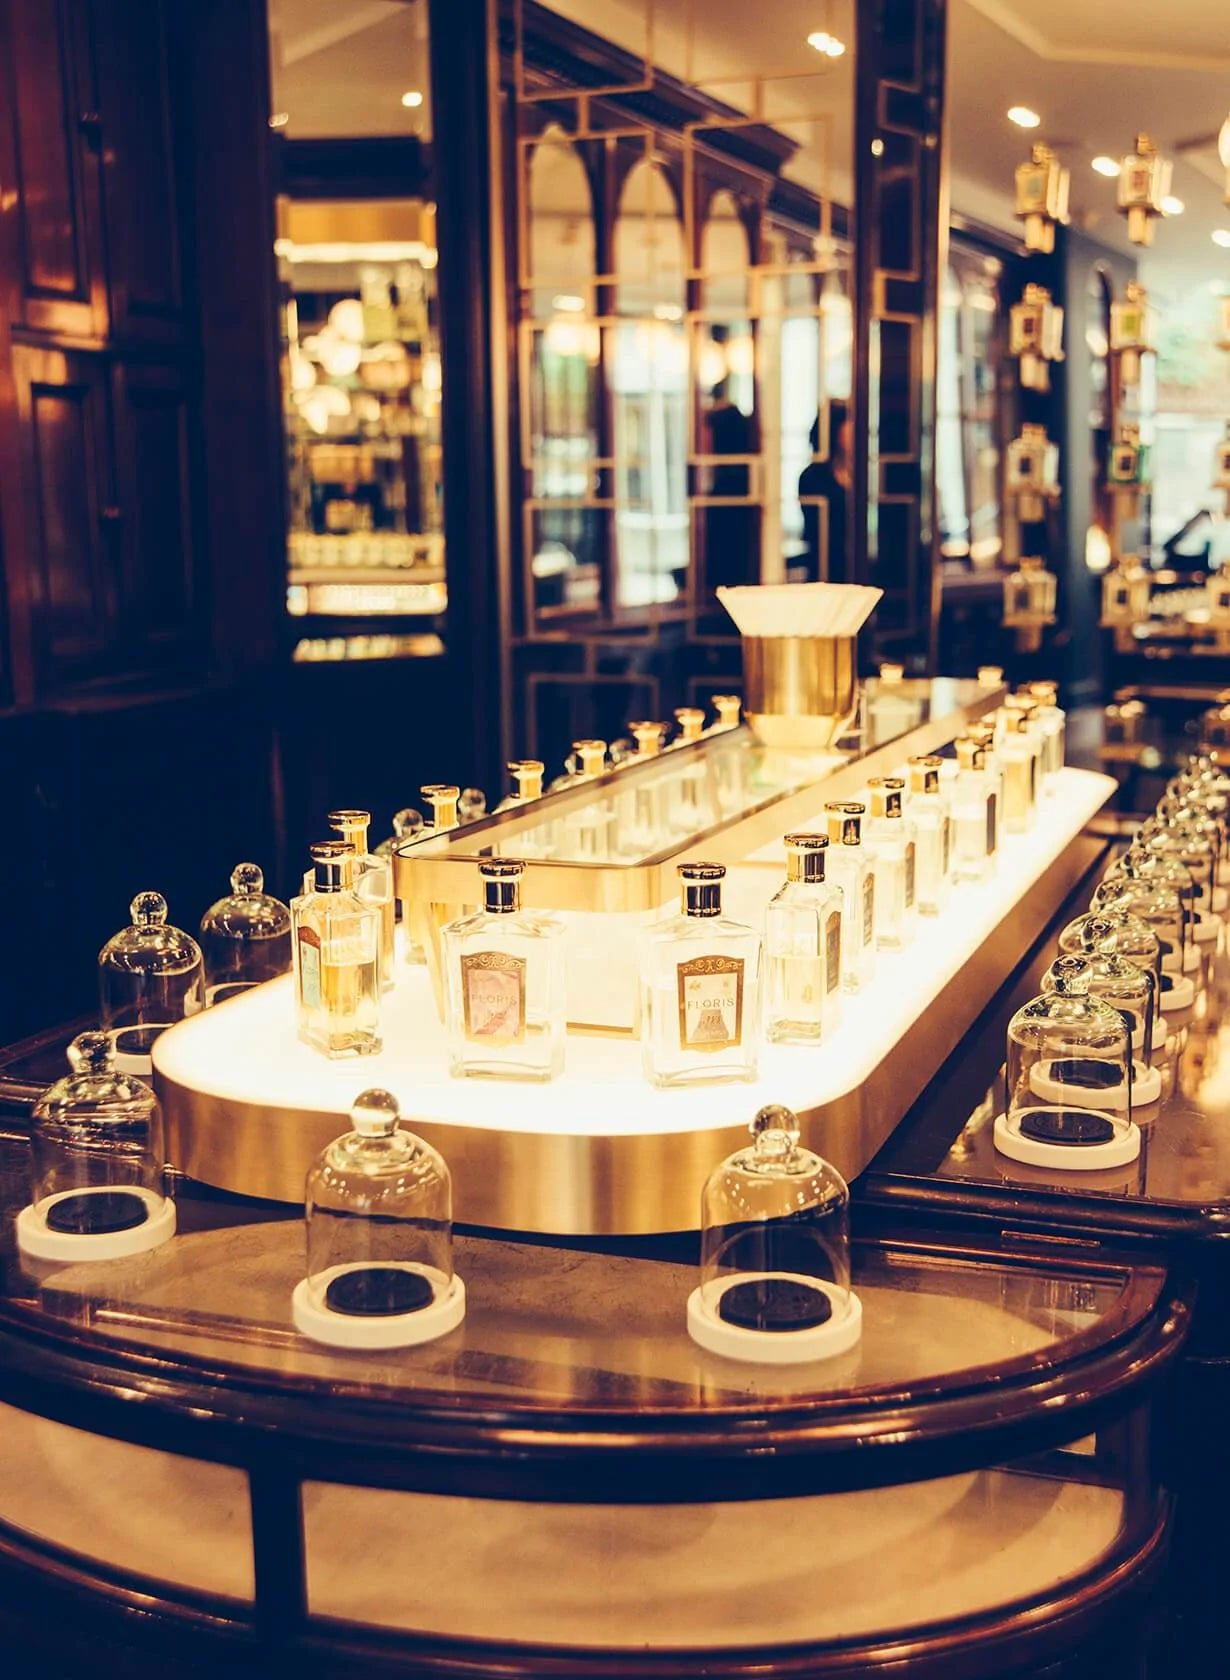 Carousel of perfume inside the Floris London shop